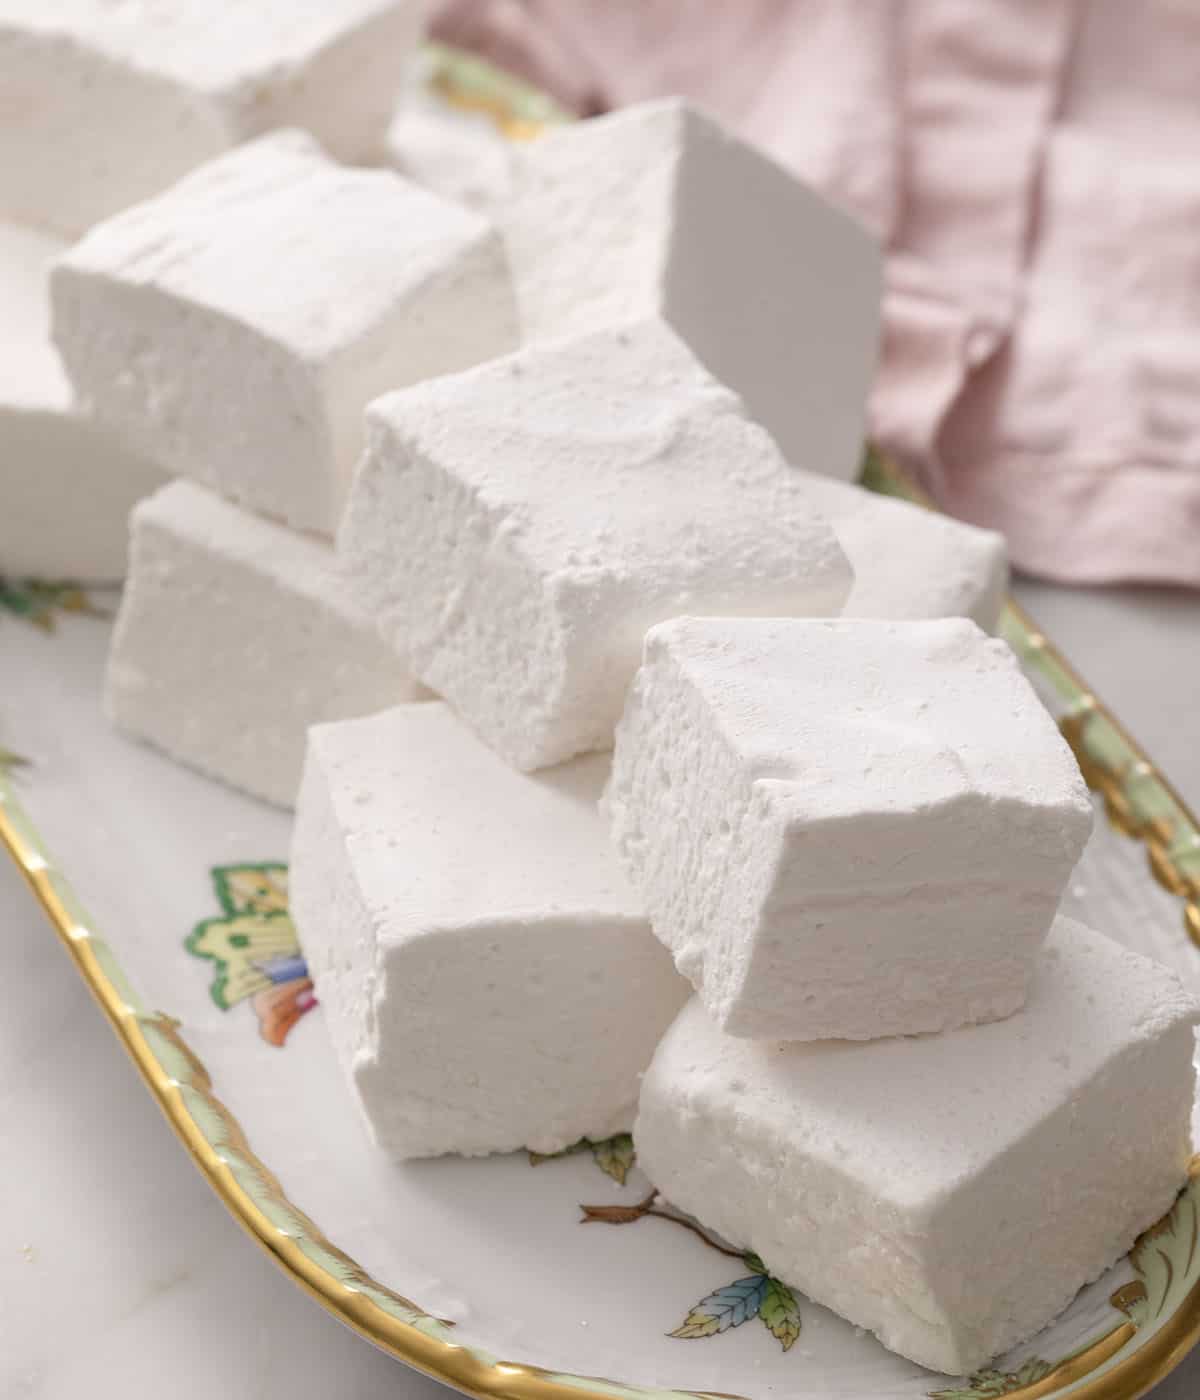 Big homemade marshmallows on a porcelain platter.